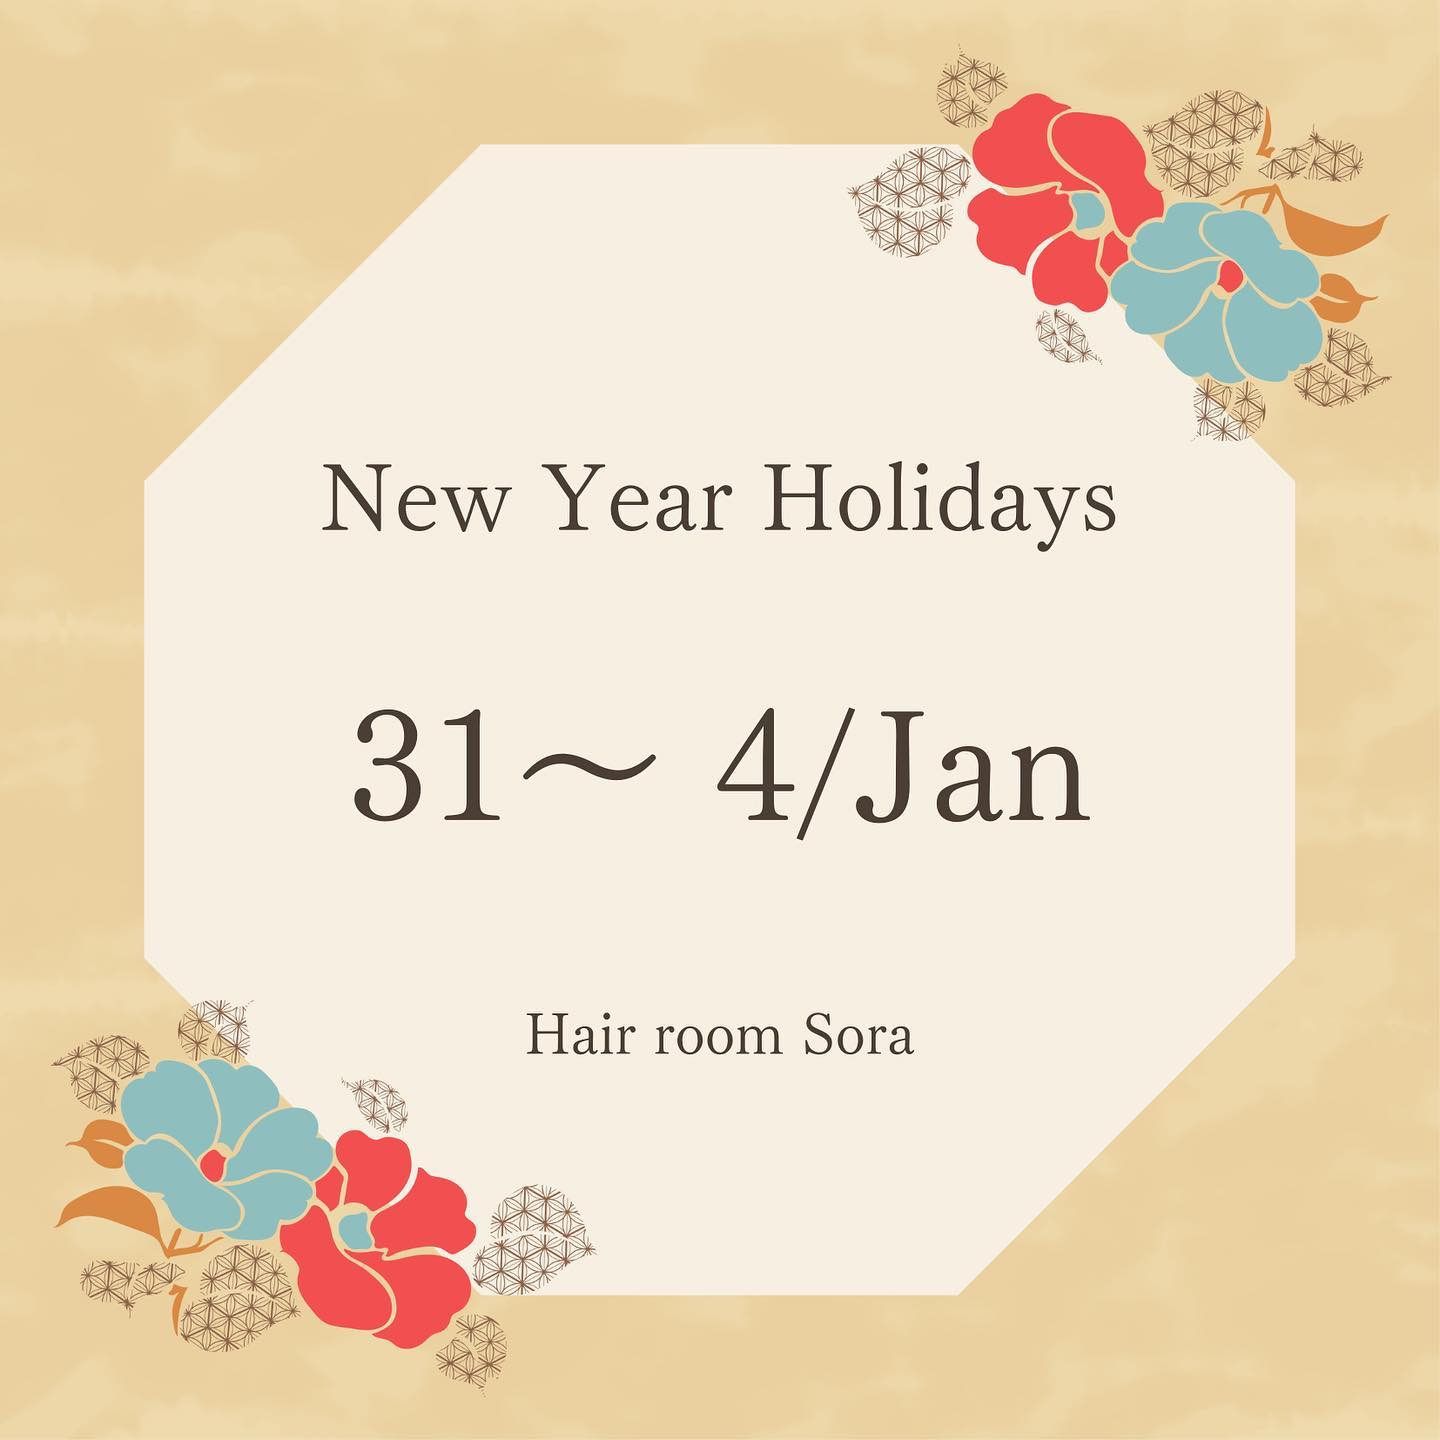 Happy New Year 2023  Much peace, love and joy to you all in 2023.  We are open from 5th JAN.  …………………………
ร้าน Hair Room Sora 299/7 ชั้น1, Sukhumvit Living Town, ซอยสุขุมวิท21(อโศก)
โทรศัพท์ : 02-169-1622
ร้านเปิดทุกวัน 10.00-18:40น.  ปิดวันจันทร์ชั่วคราว
#Hairroomsora #hairroomsorabangkok #Hairsalon #Hairstyle #Sukhumvitlivingtown #sukhumvit21 #Japanesesalon #DigitalPerm #ヘアールームソラ #fashioncolor #ร้านซาลอนญี่ปุ่น #ซาลอน #ทำผมรับปริญญา #ทำผมออกงาน #รับทำผม #ดัดดิจิตอล #ยืดผม #ย้อมผม